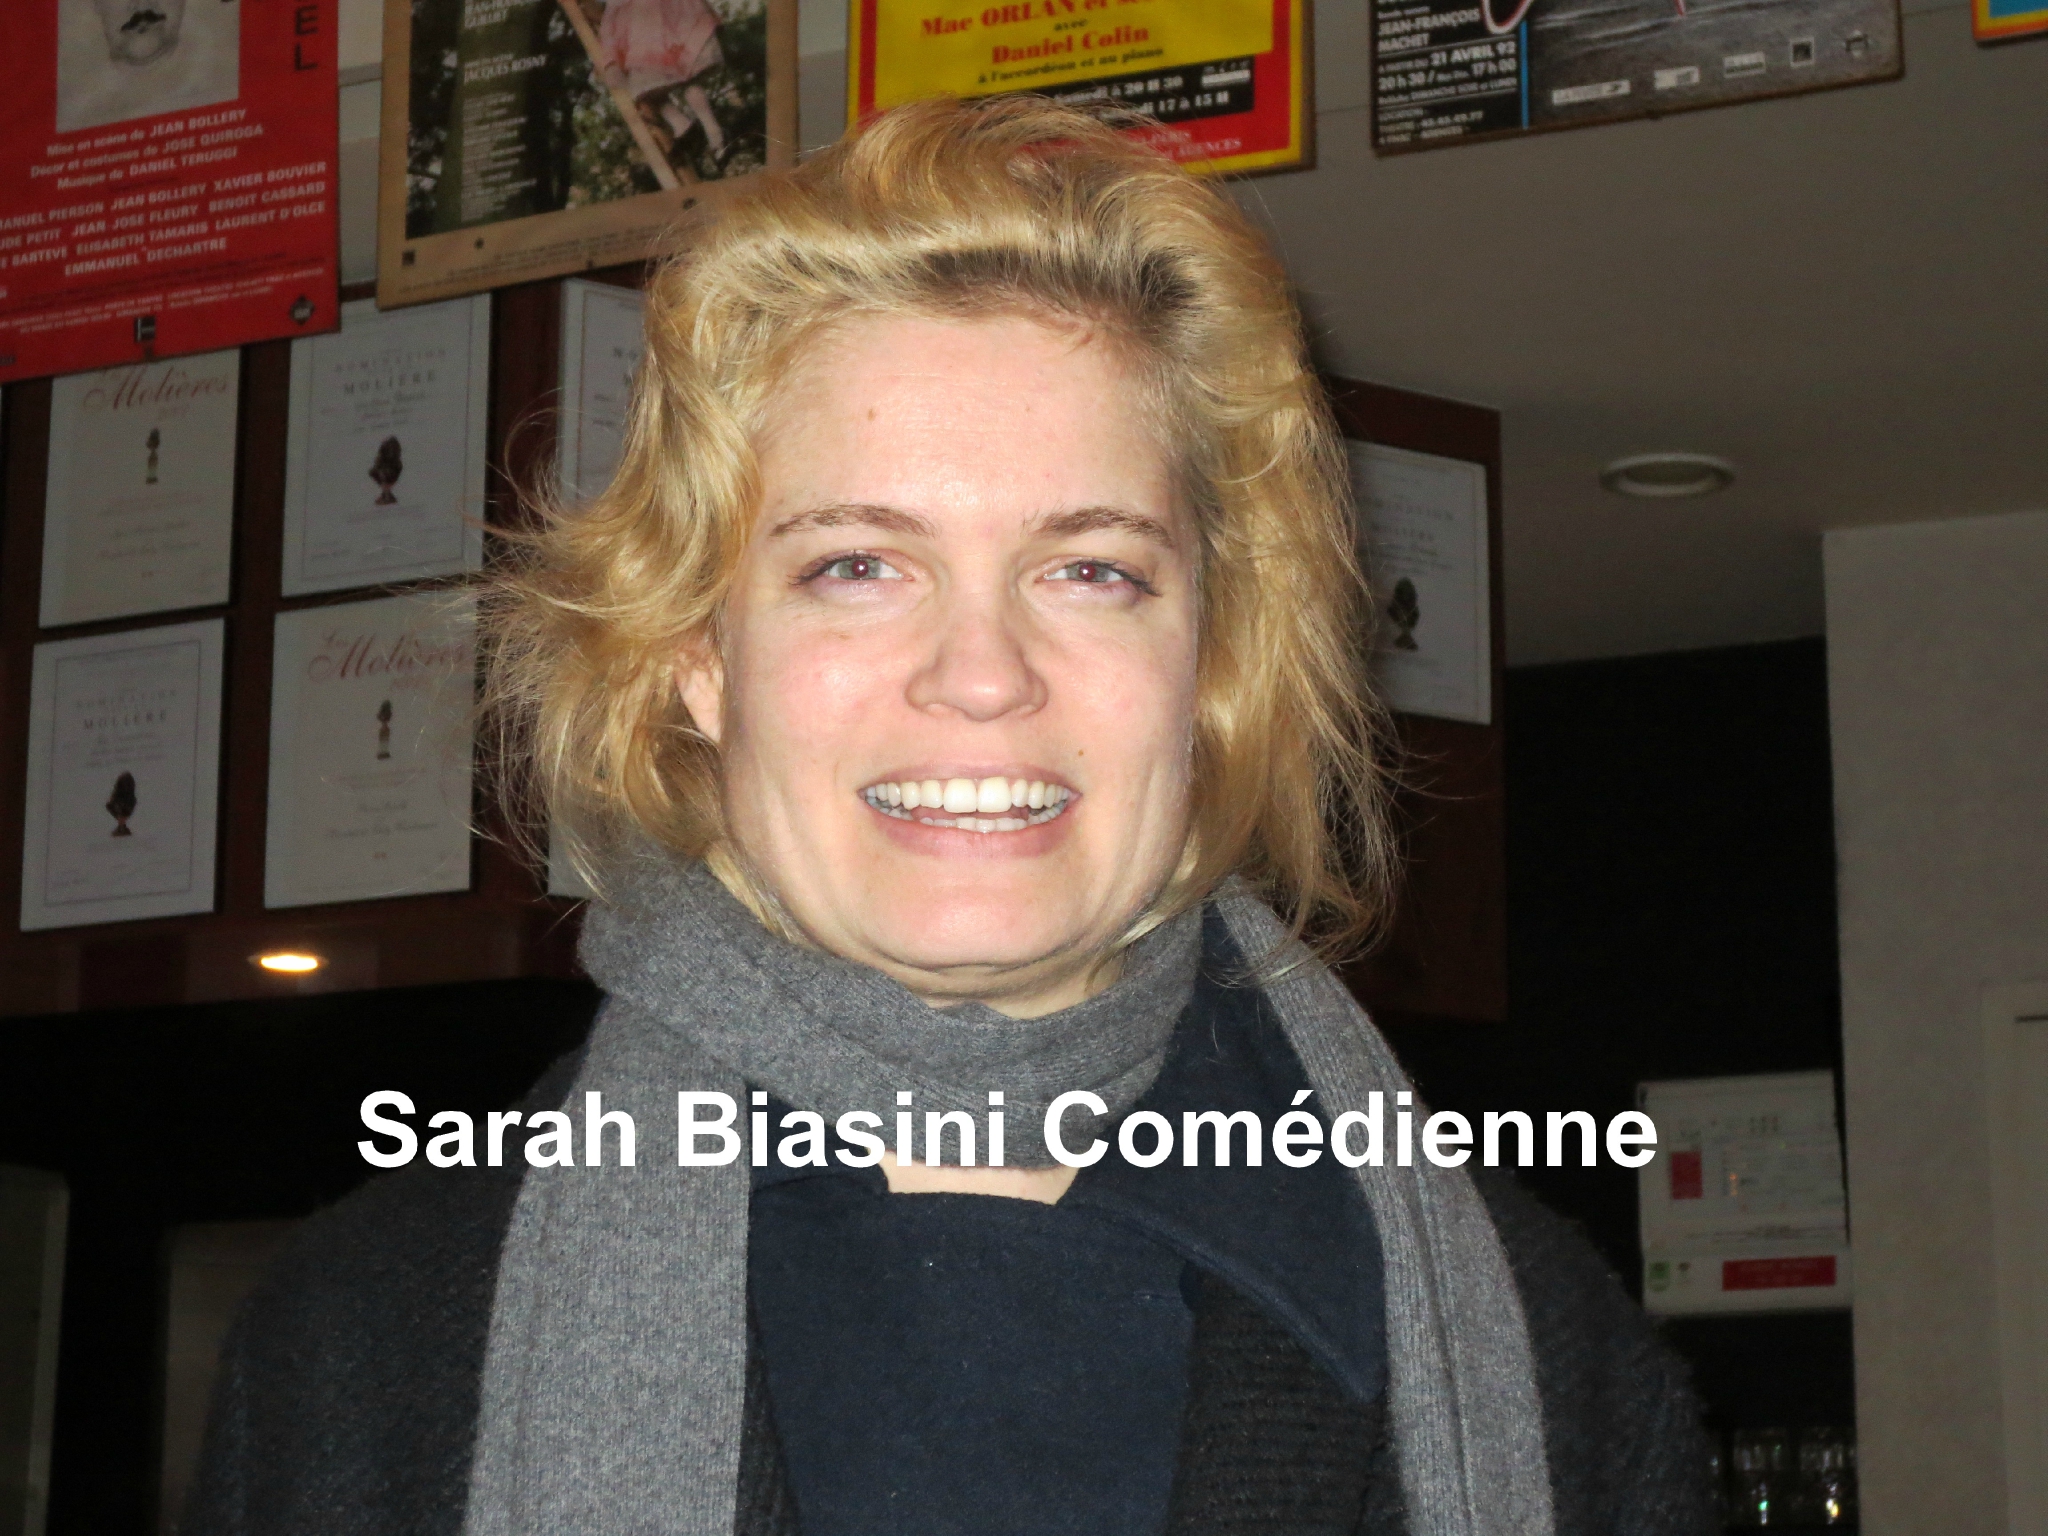 Sarah Biasini